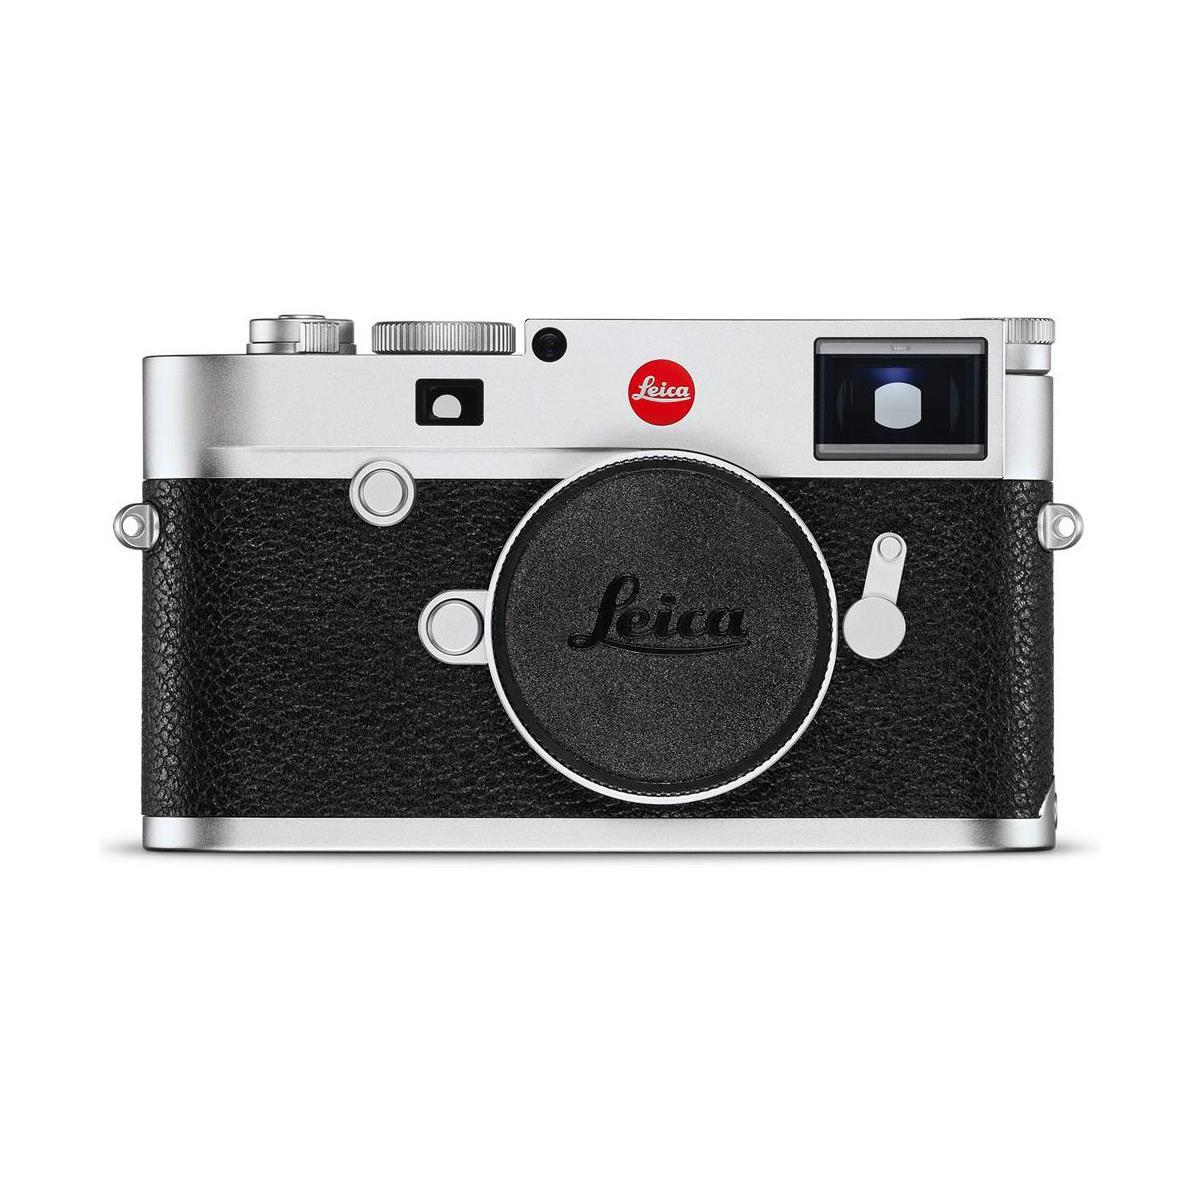 

Leica M10 Mirrorless Digital Rangefinder Camera, Silver Chrome